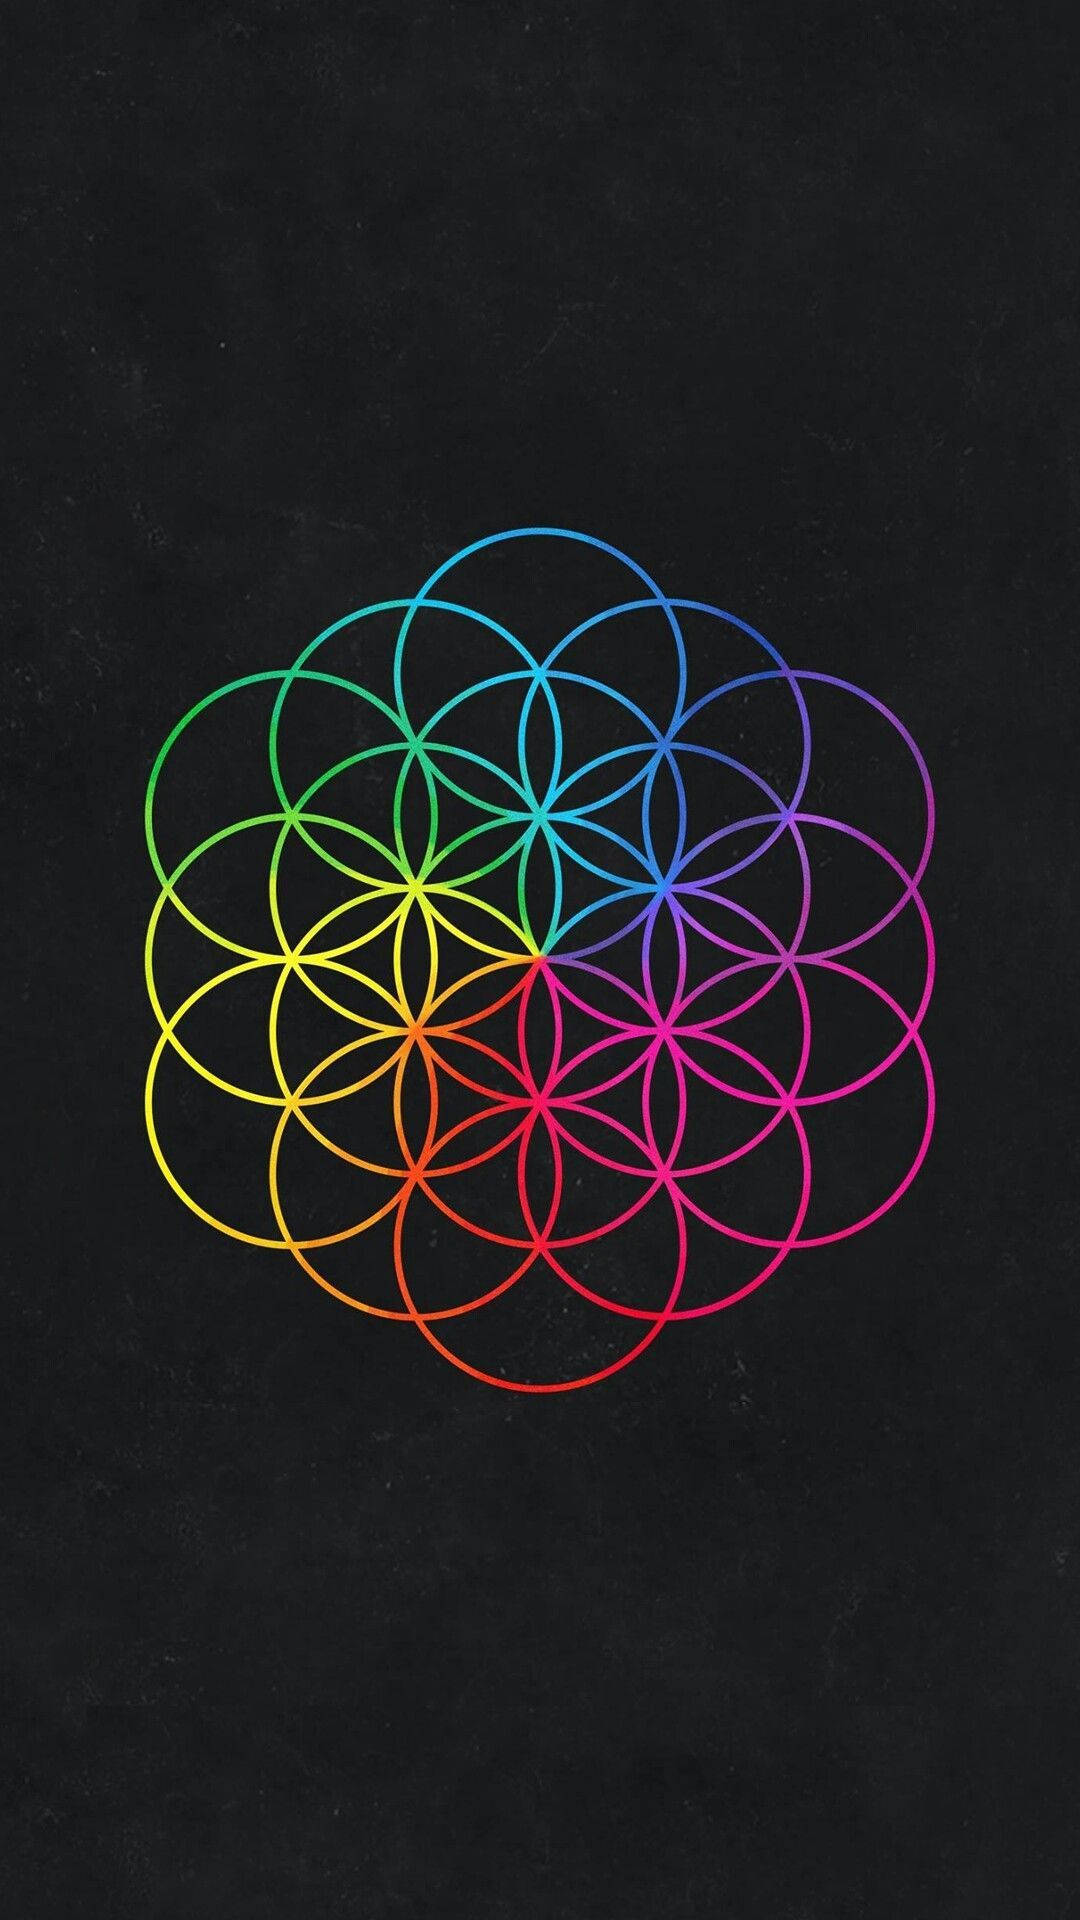 Coldplay Head Full of Dreams Symbol Wallpaper